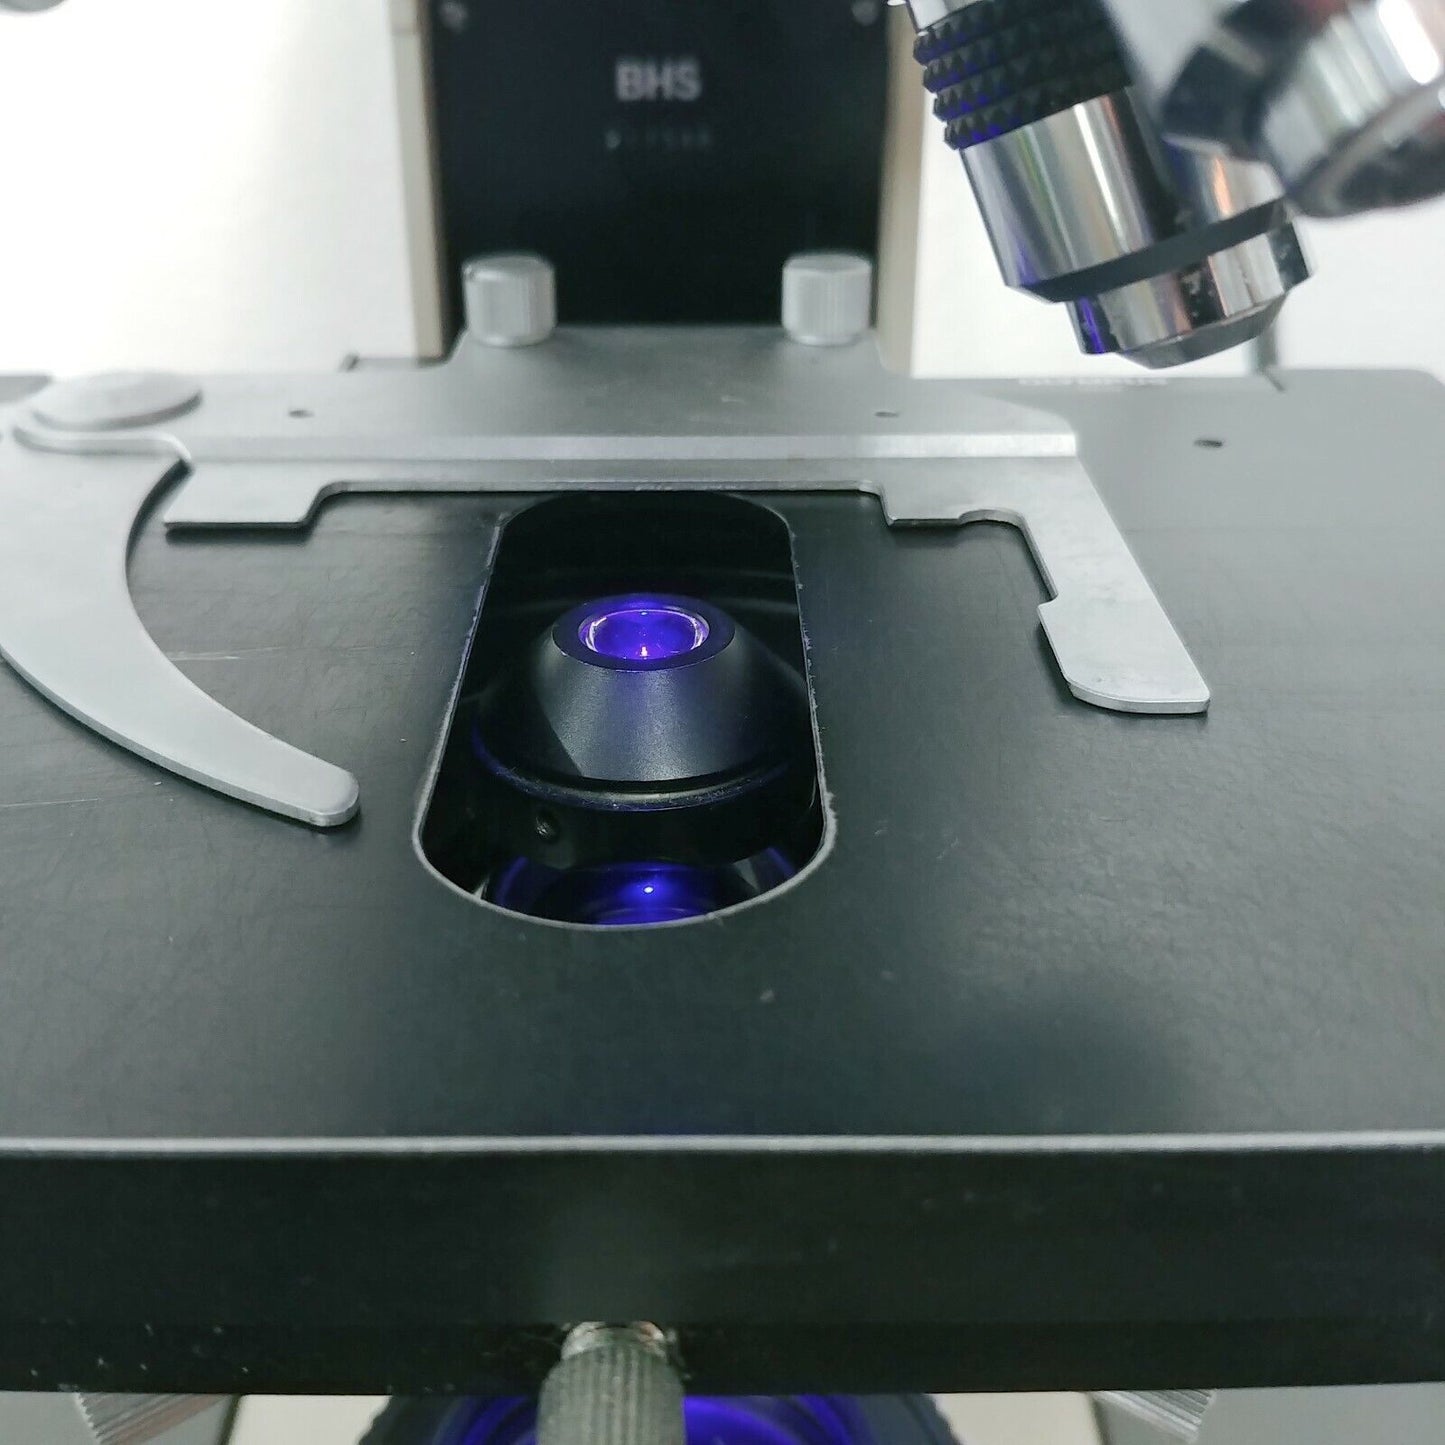 Olympus Microscope BH2 with Fluorescence & SPlan Objectives - microscopemarketplace